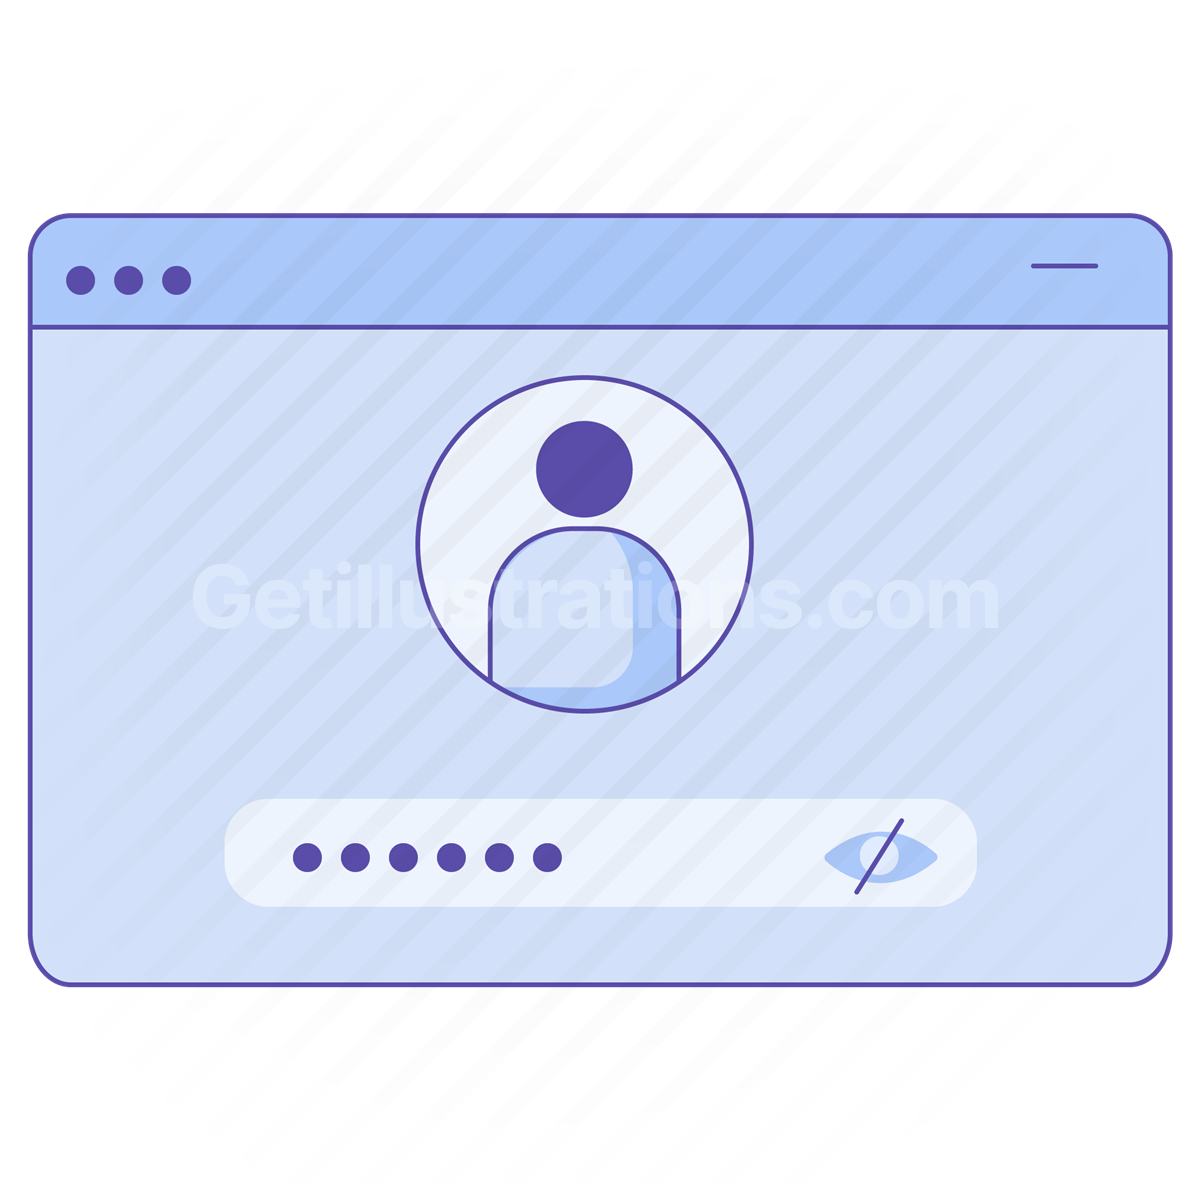 profile, account, log in, user, password